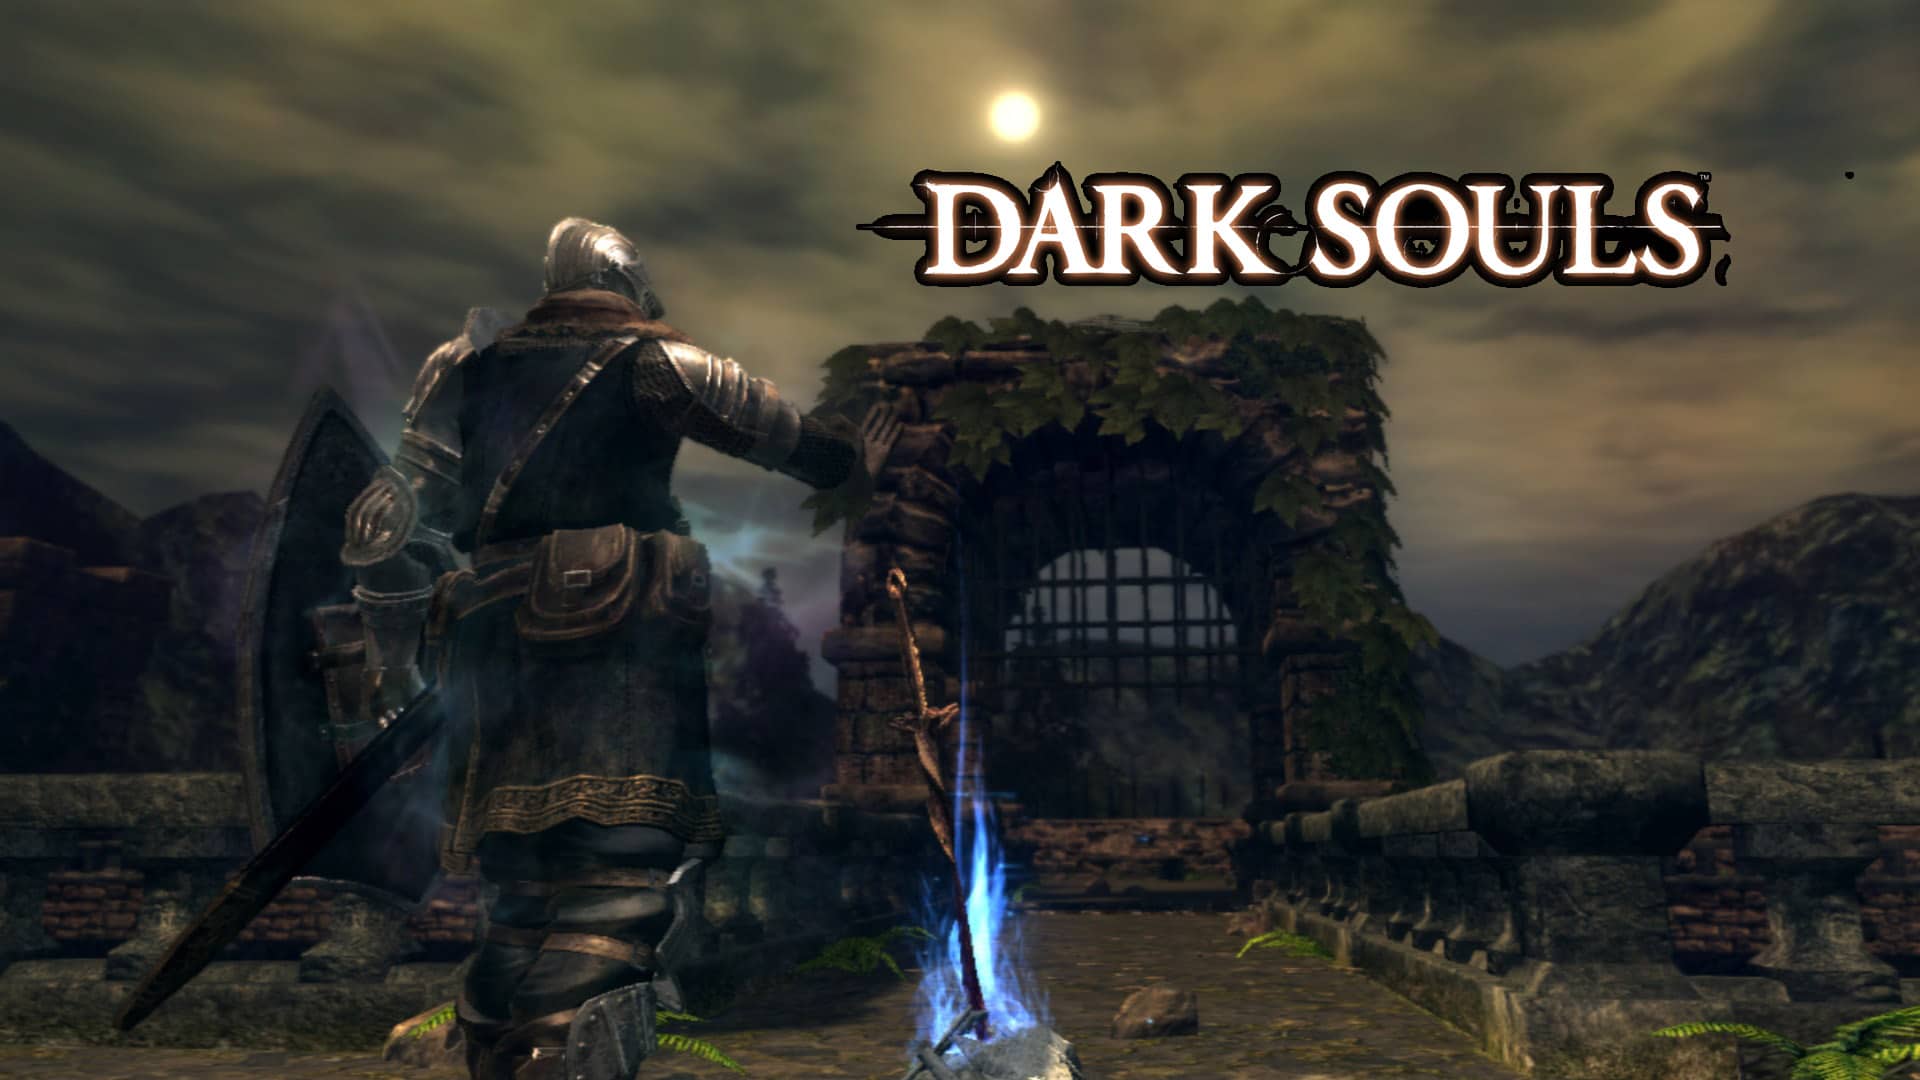 Dark Souls commands